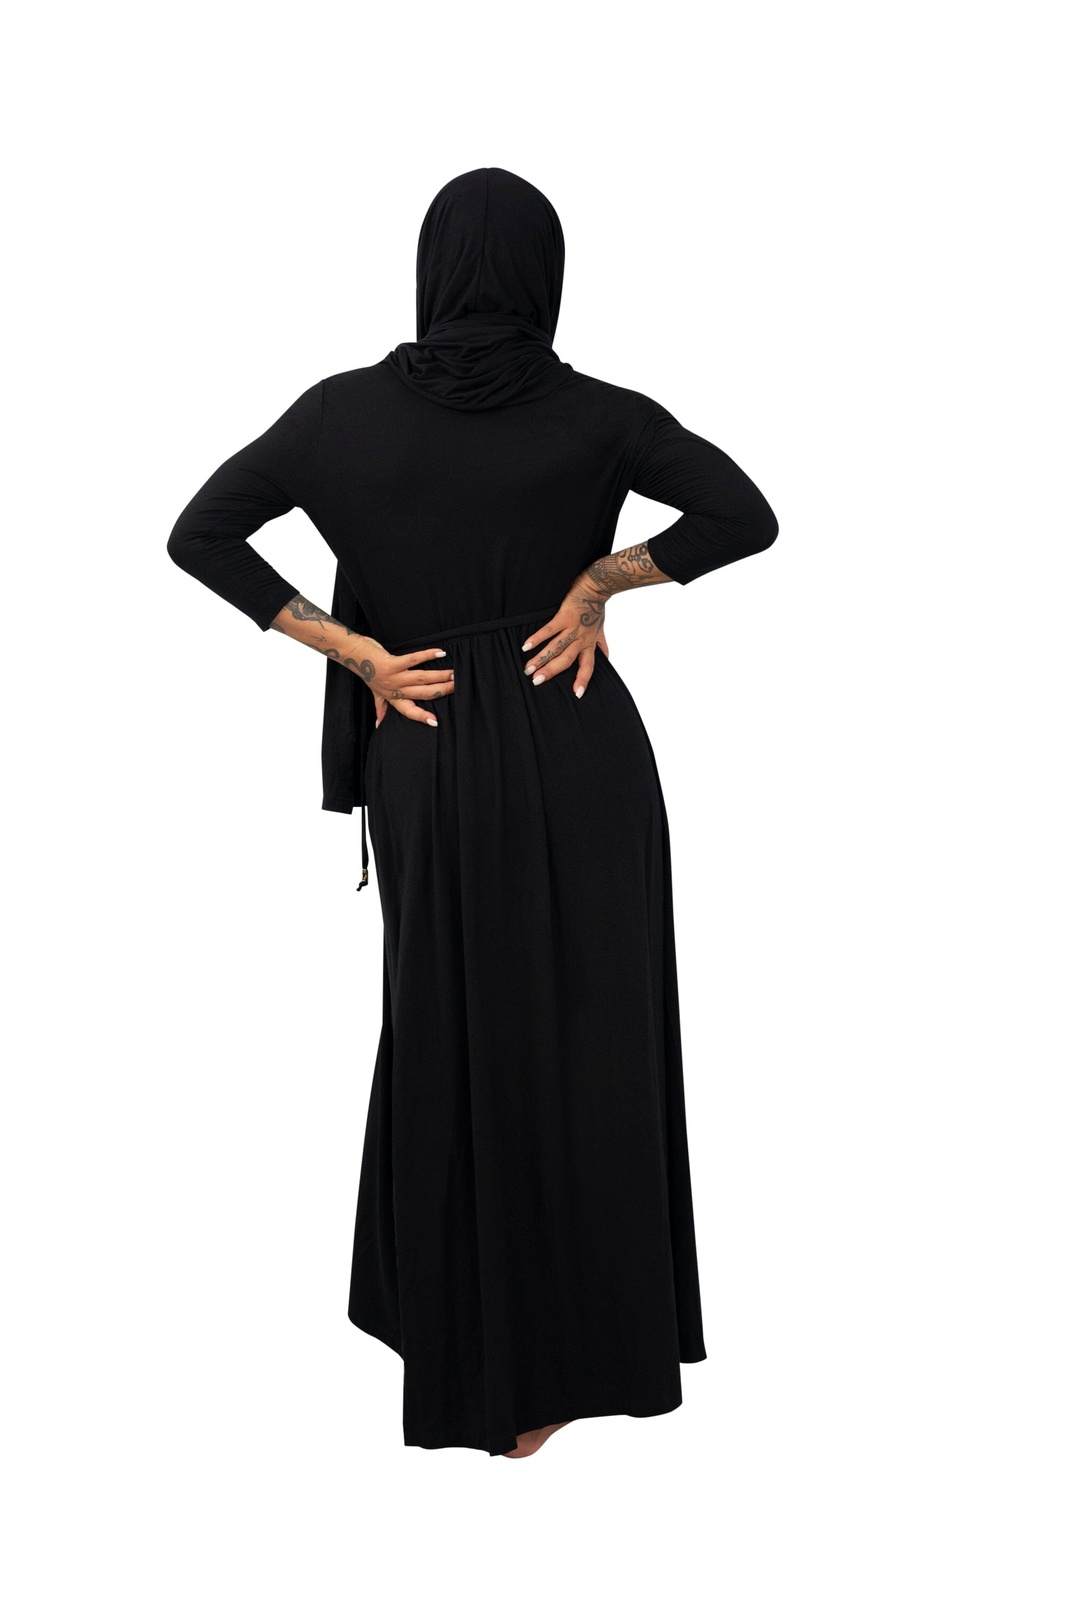 Black kimono wrap dress by Ekoluxe sustainable loungewear